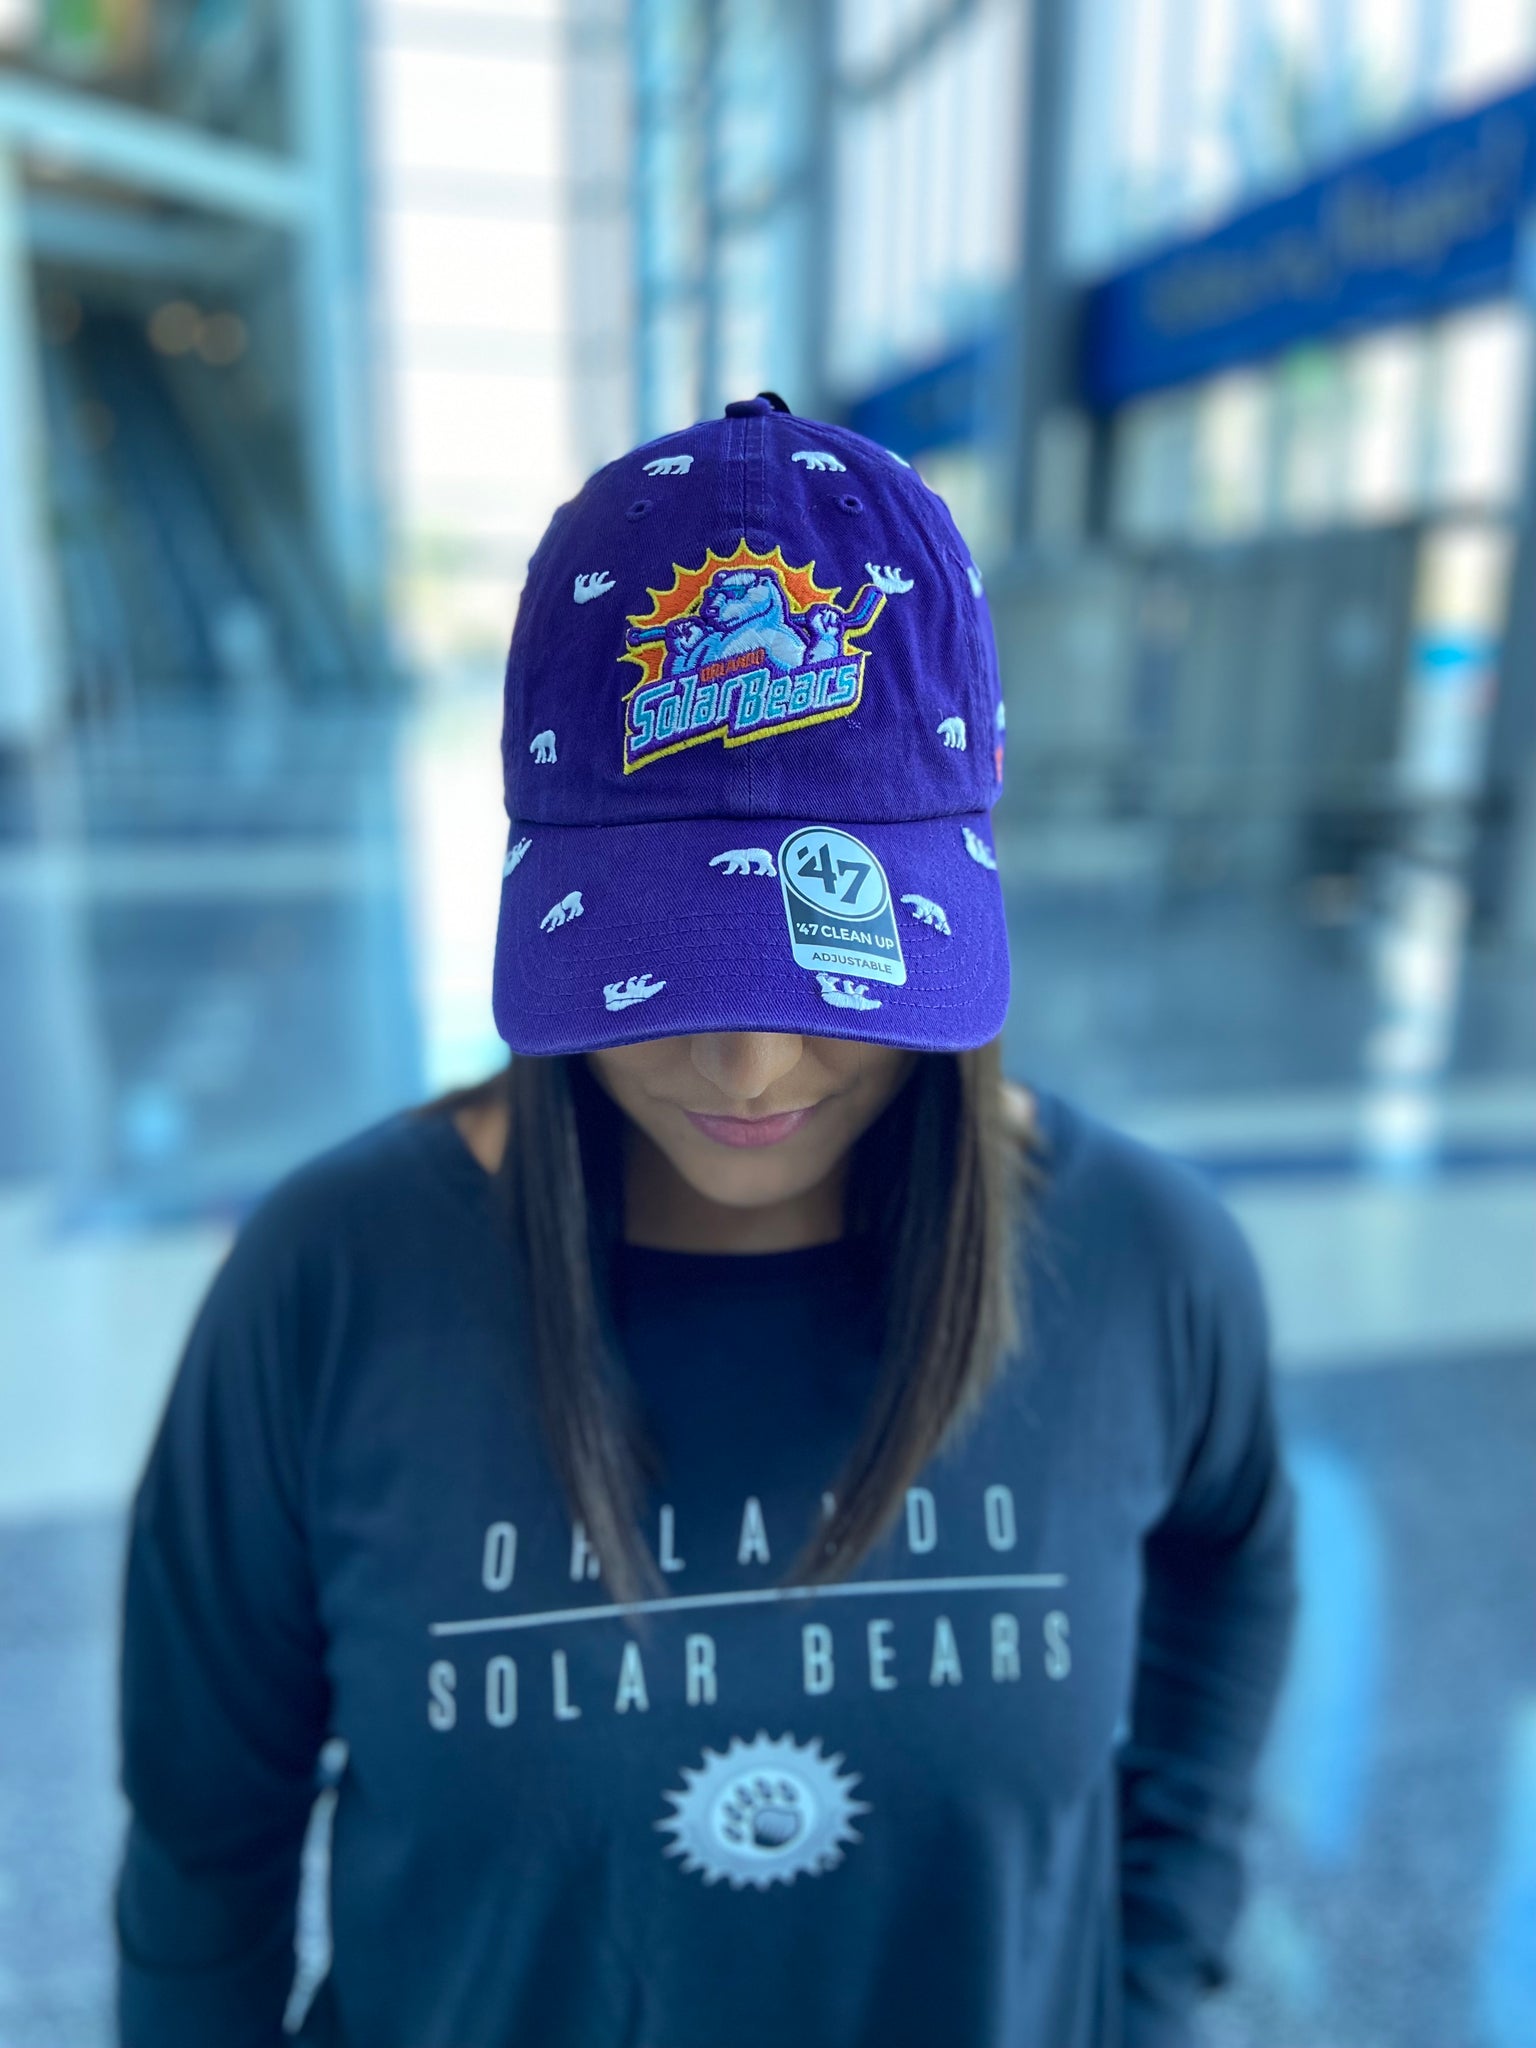 Orlando Solar Bears ECHL adjustable hat | SidelineSwap